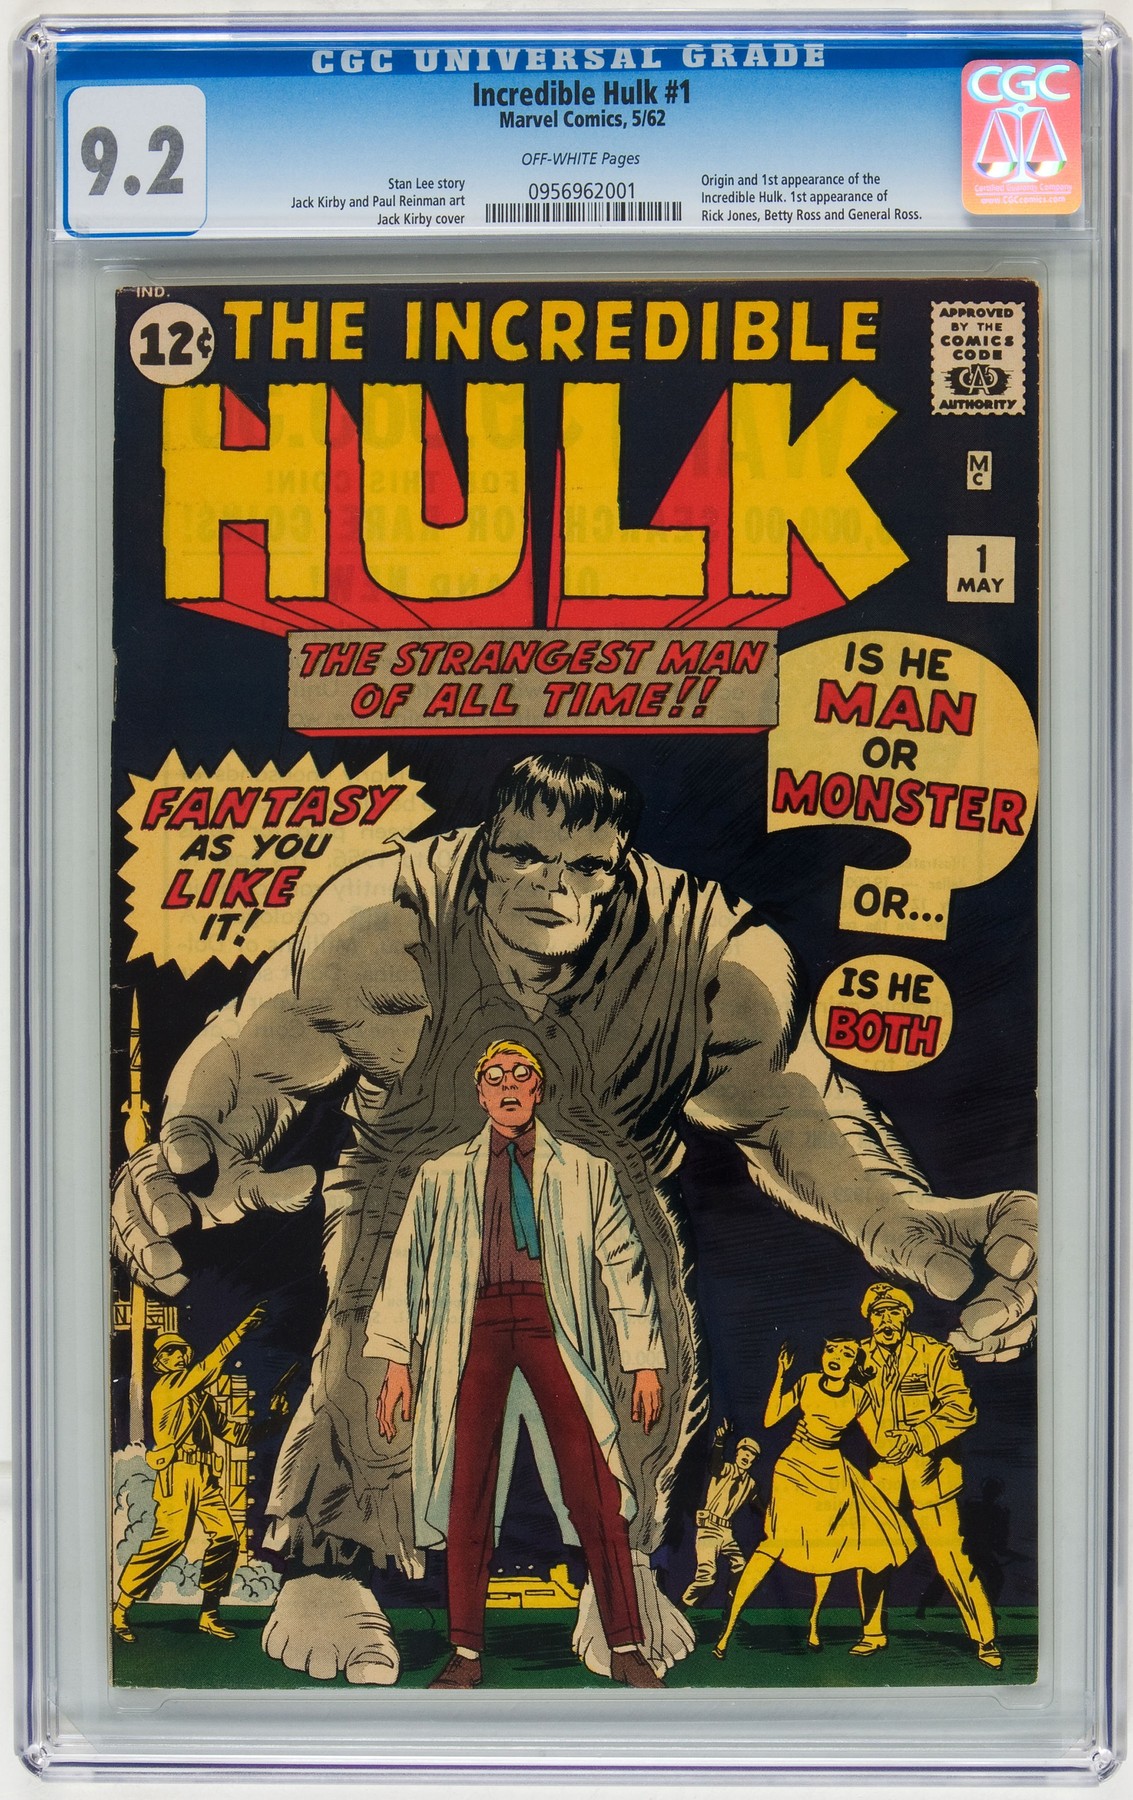 Hulk, prvo izdanje, strip